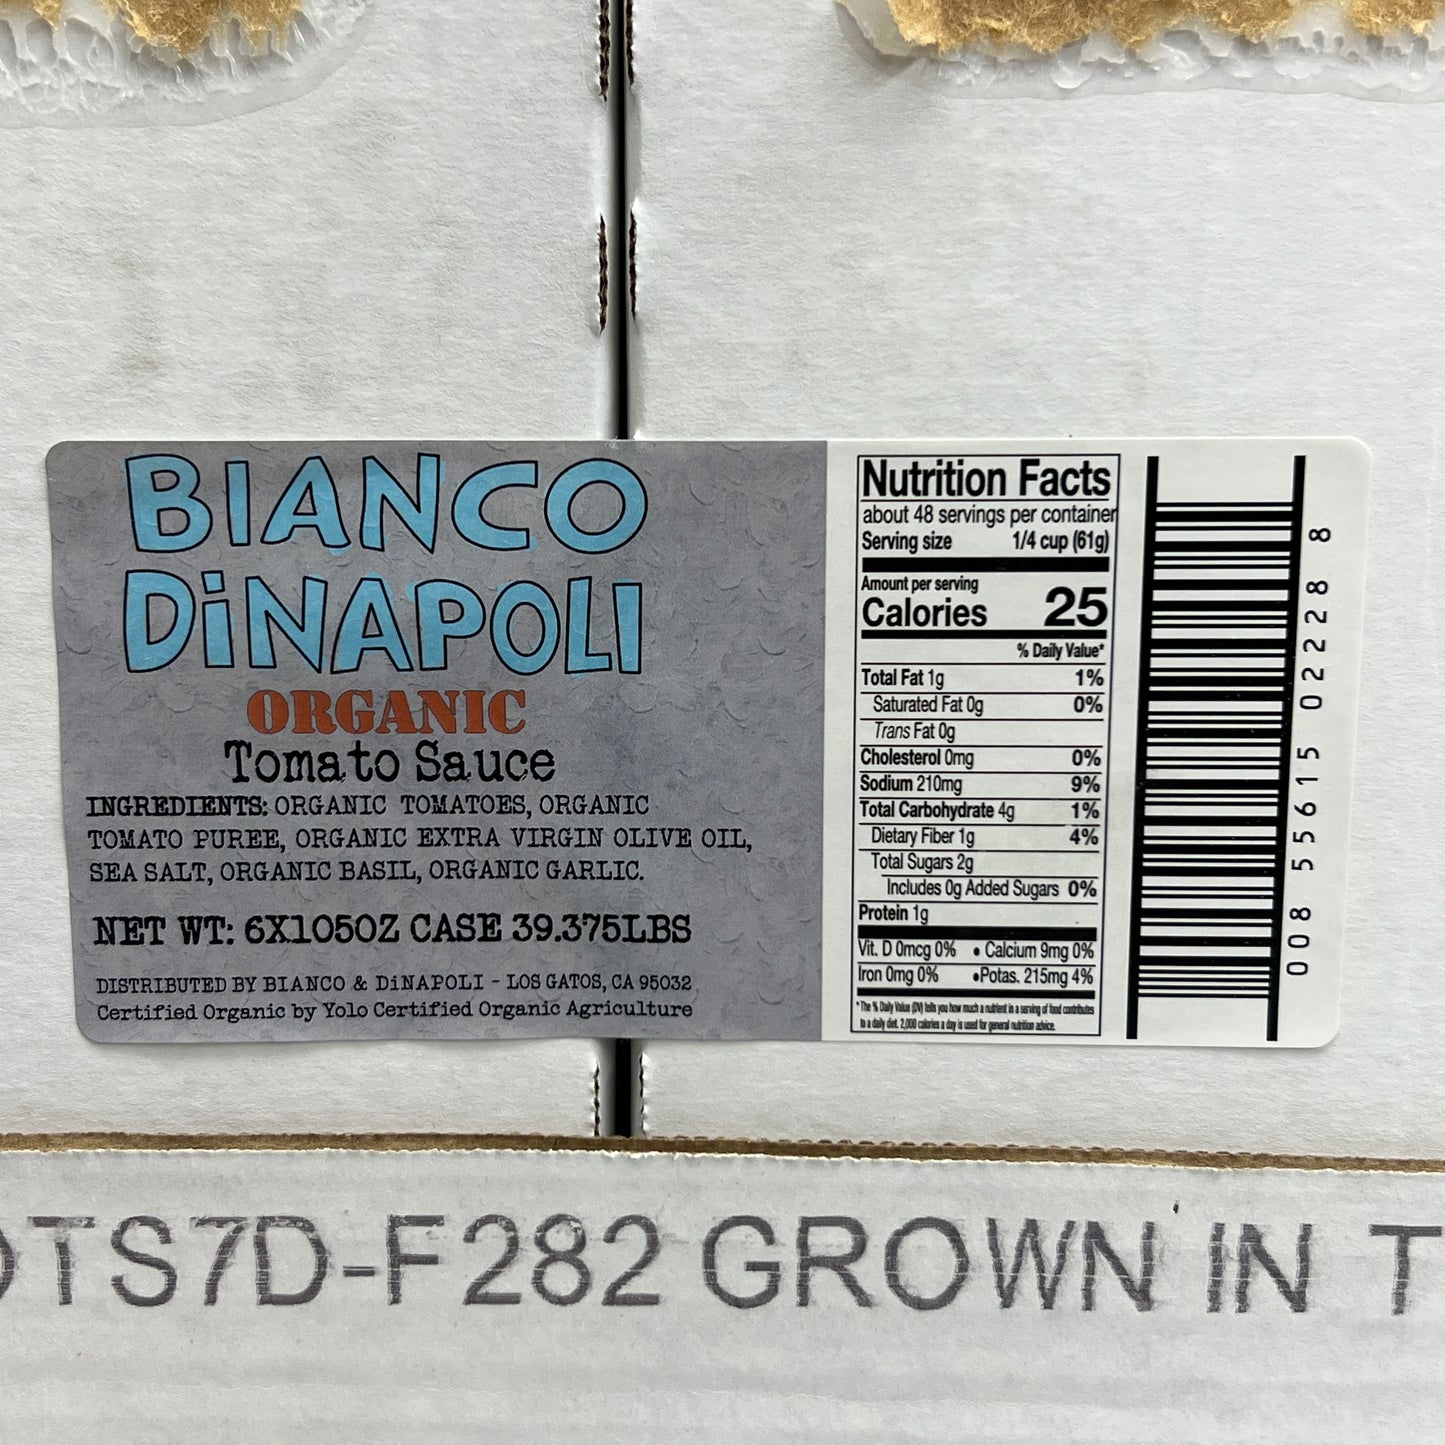 BIANCO DINAPOLI 6-PACK! Organic Tomato Sauce 105 fl oz/bag BB (New)